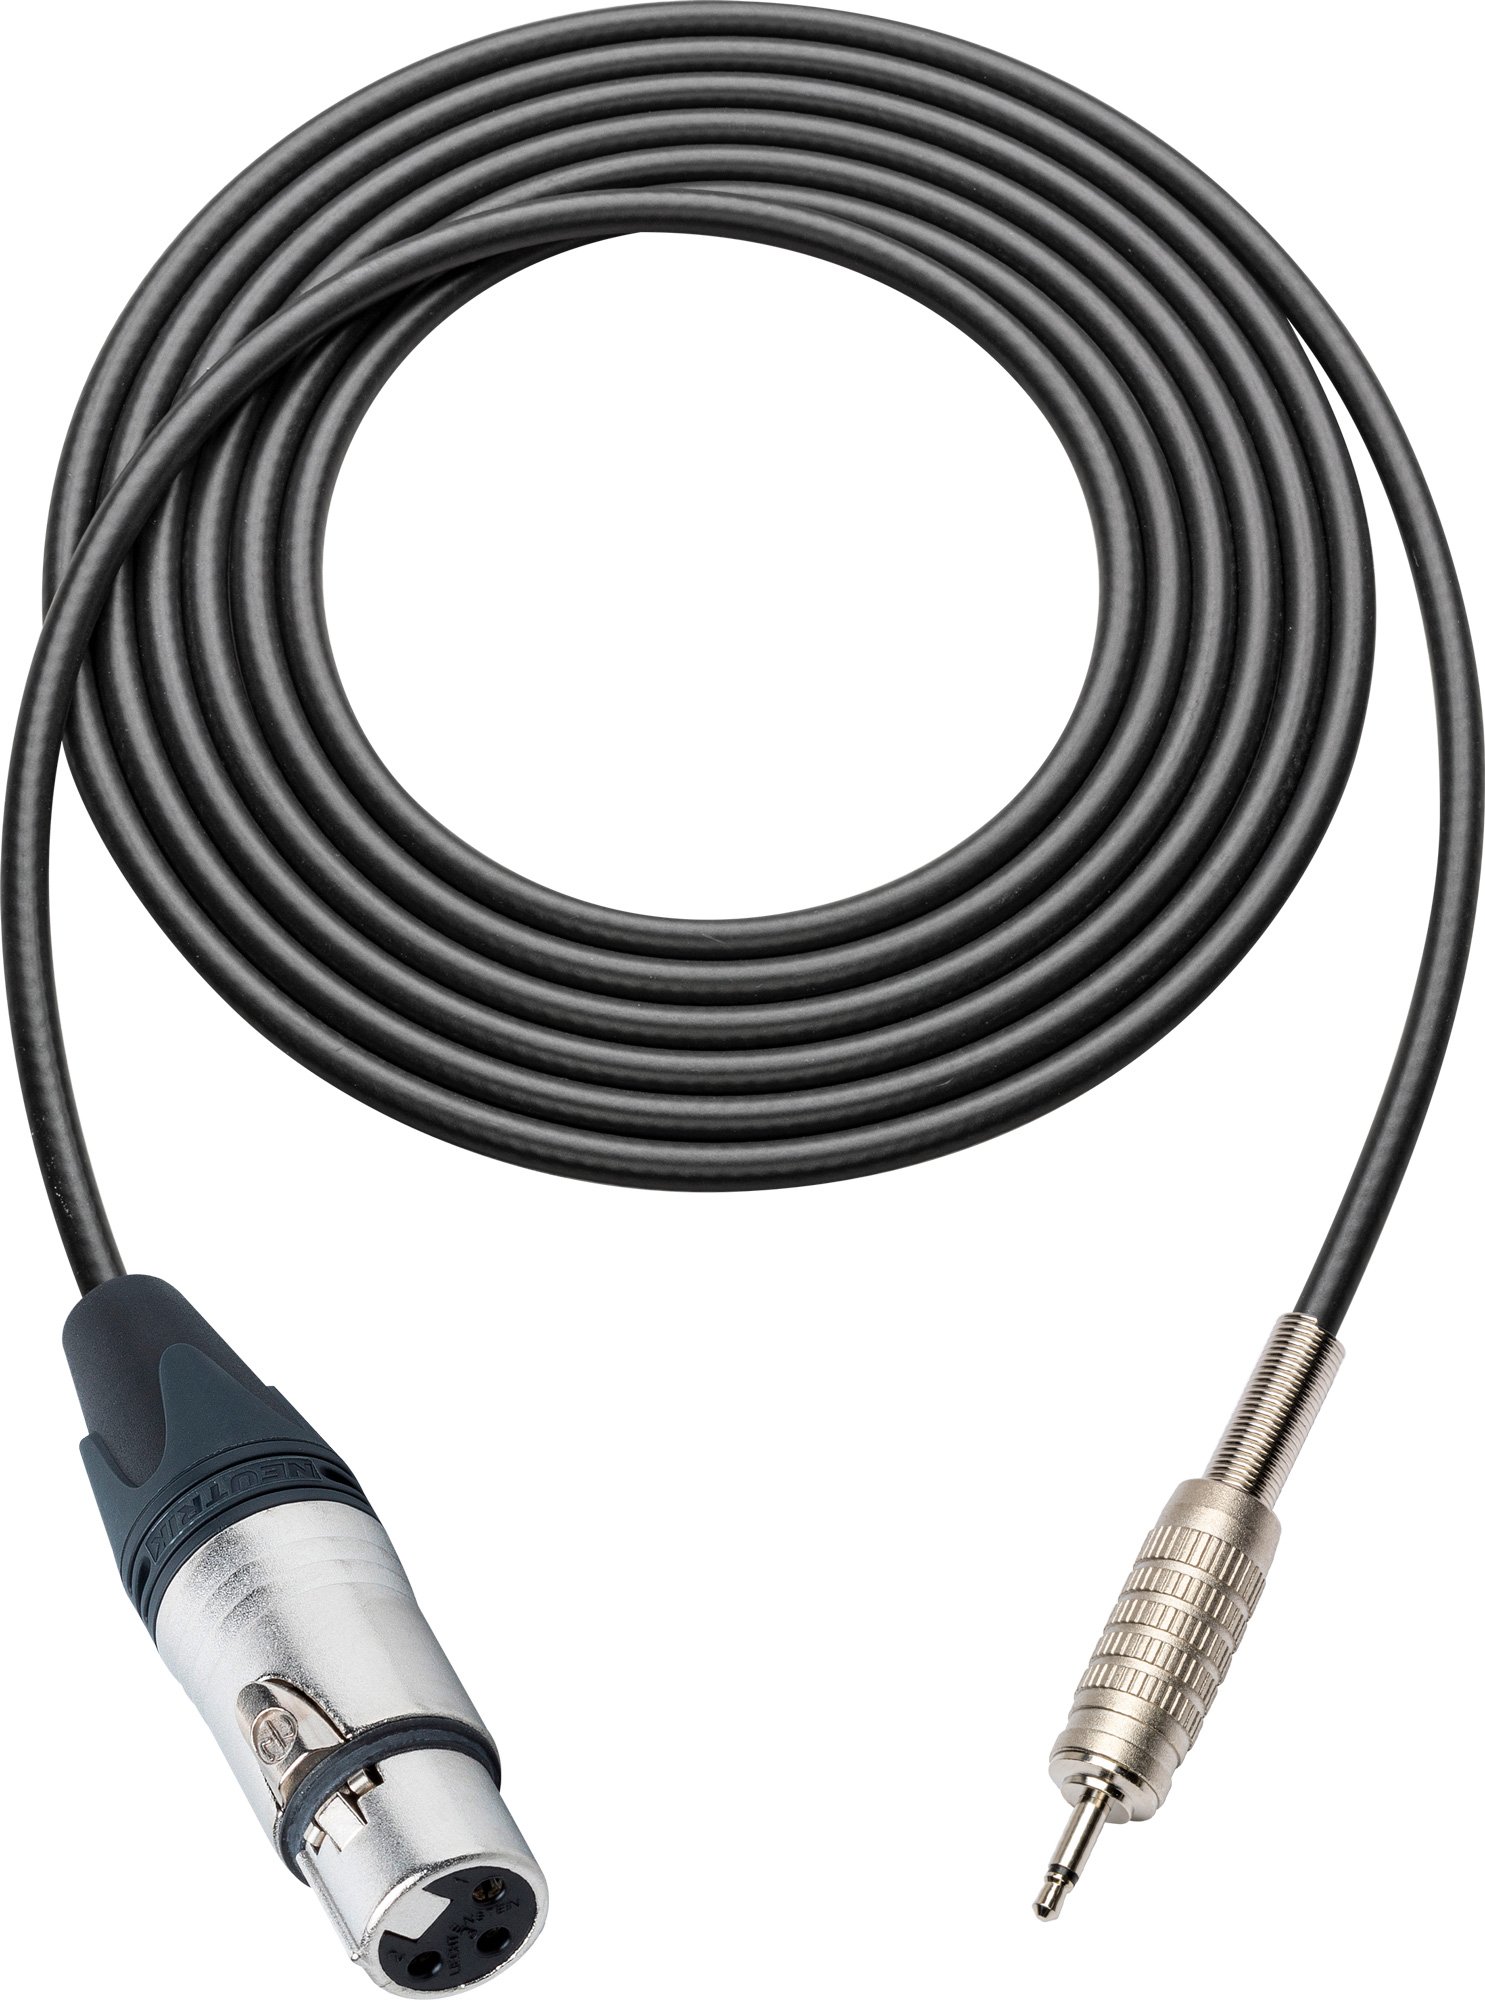 Mini to XLR Cables